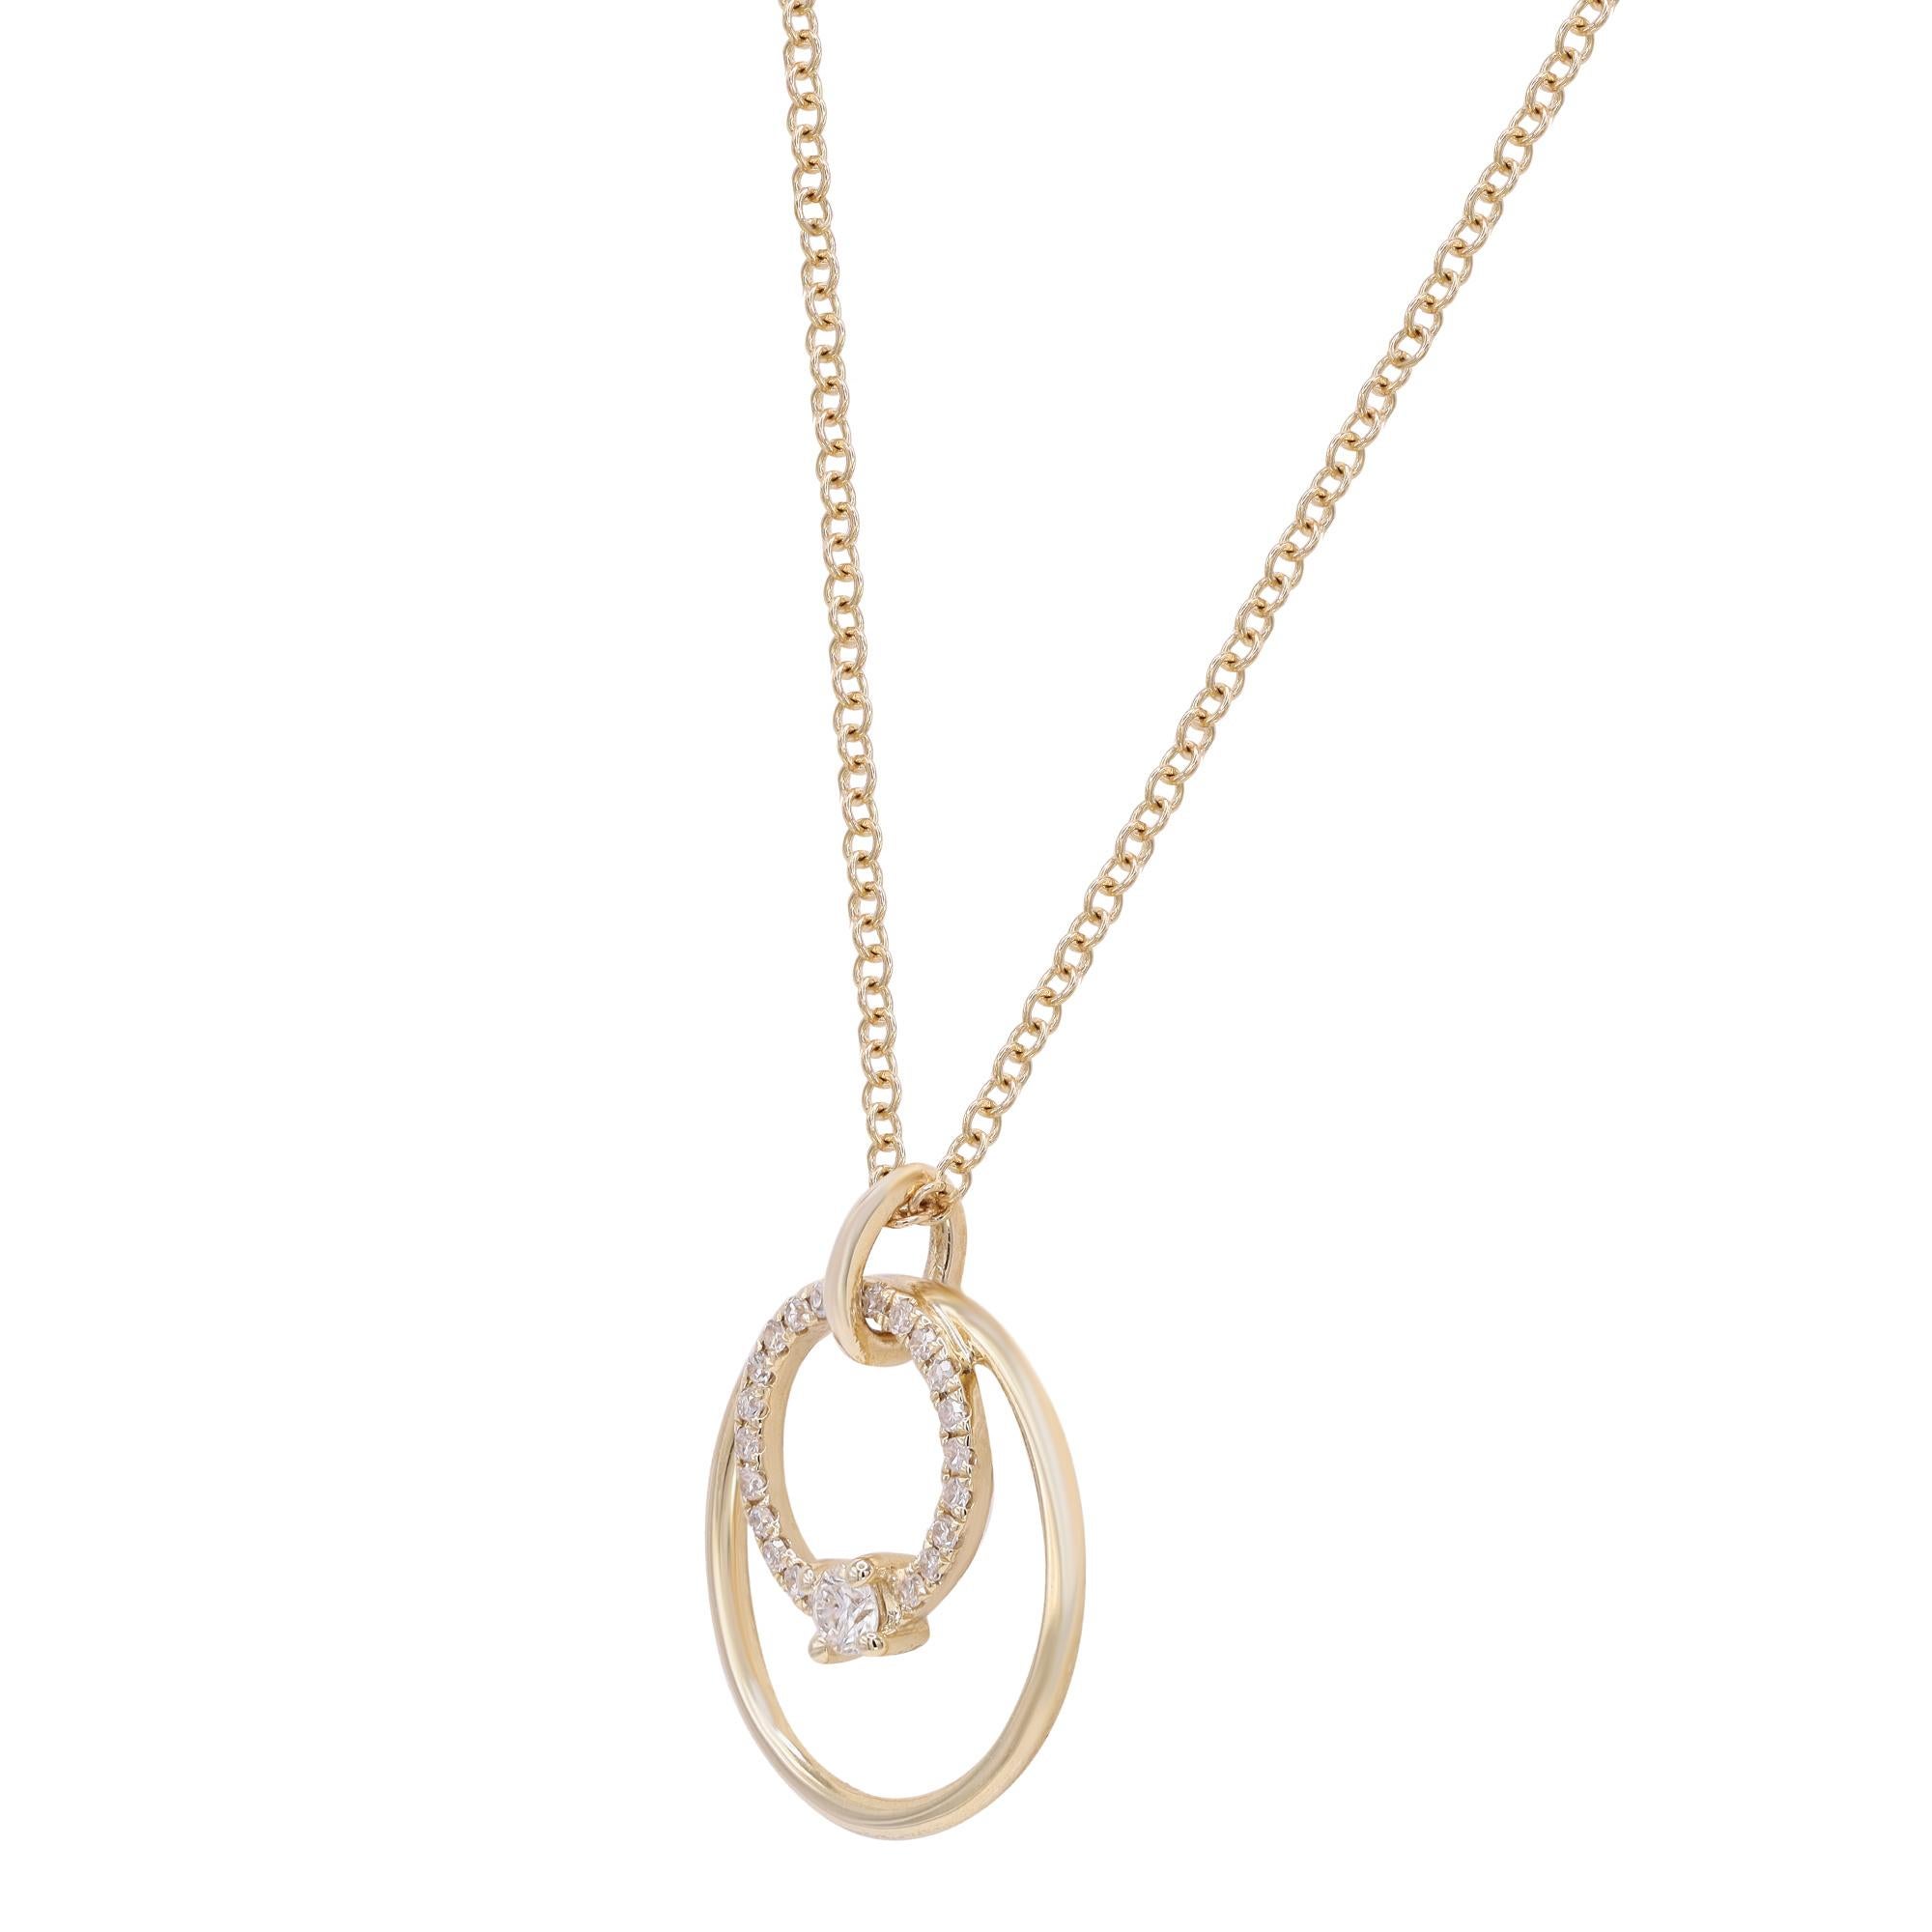 Round Cut Rachel Koen Diamond Double Ring Pendant Necklace 14K Yellow Gold 0.11Cttw For Sale